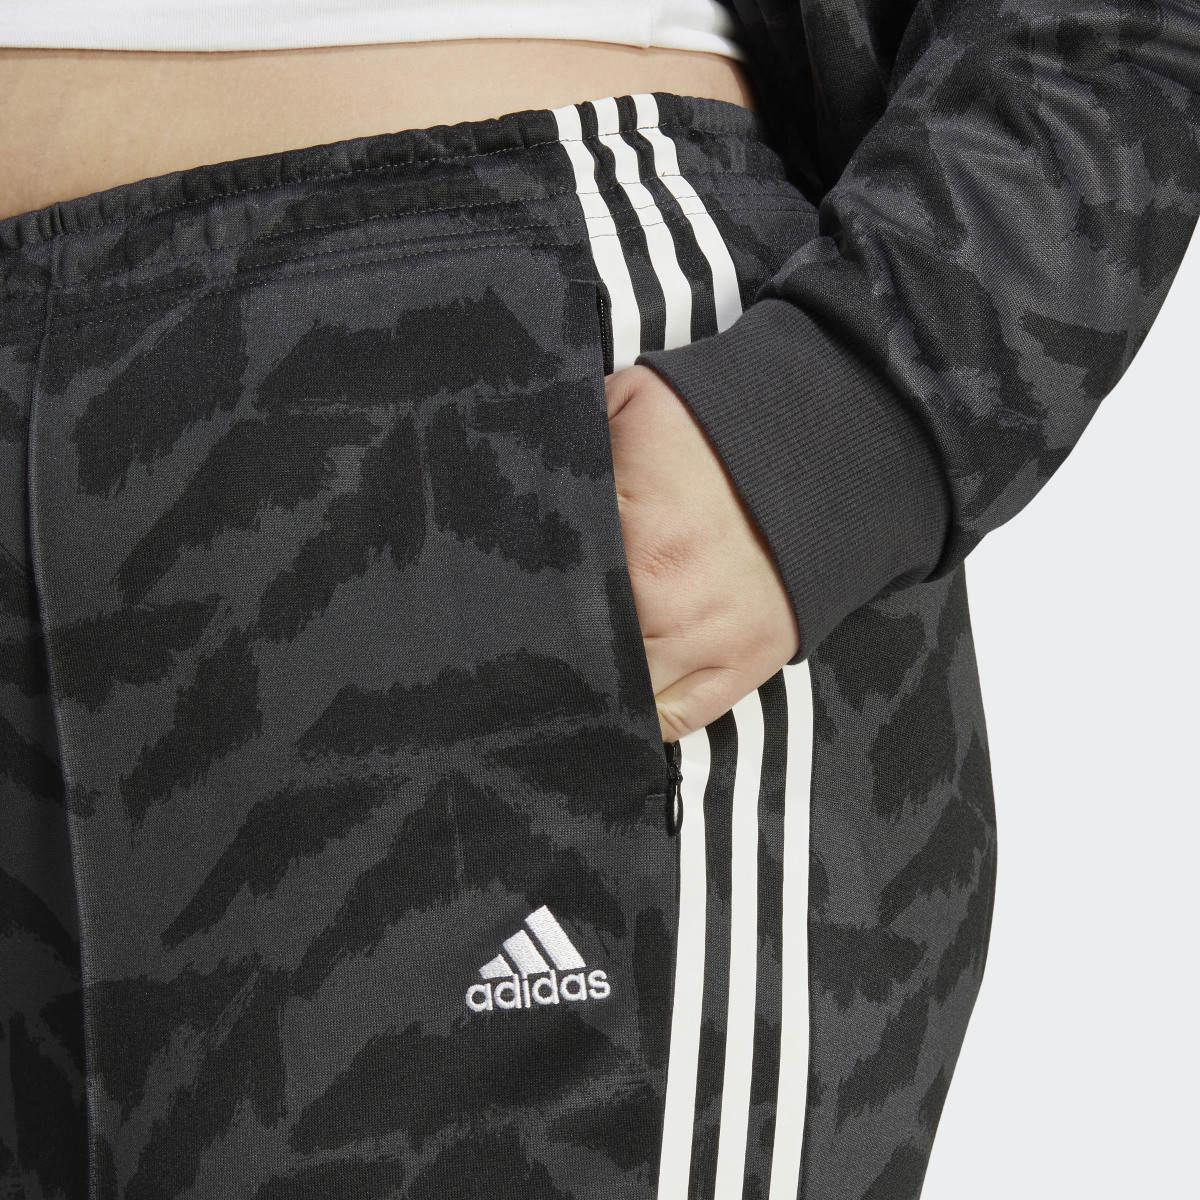 Adidas Tiro Suit Up Lifestyle Trainingshose – Große Größen. 5